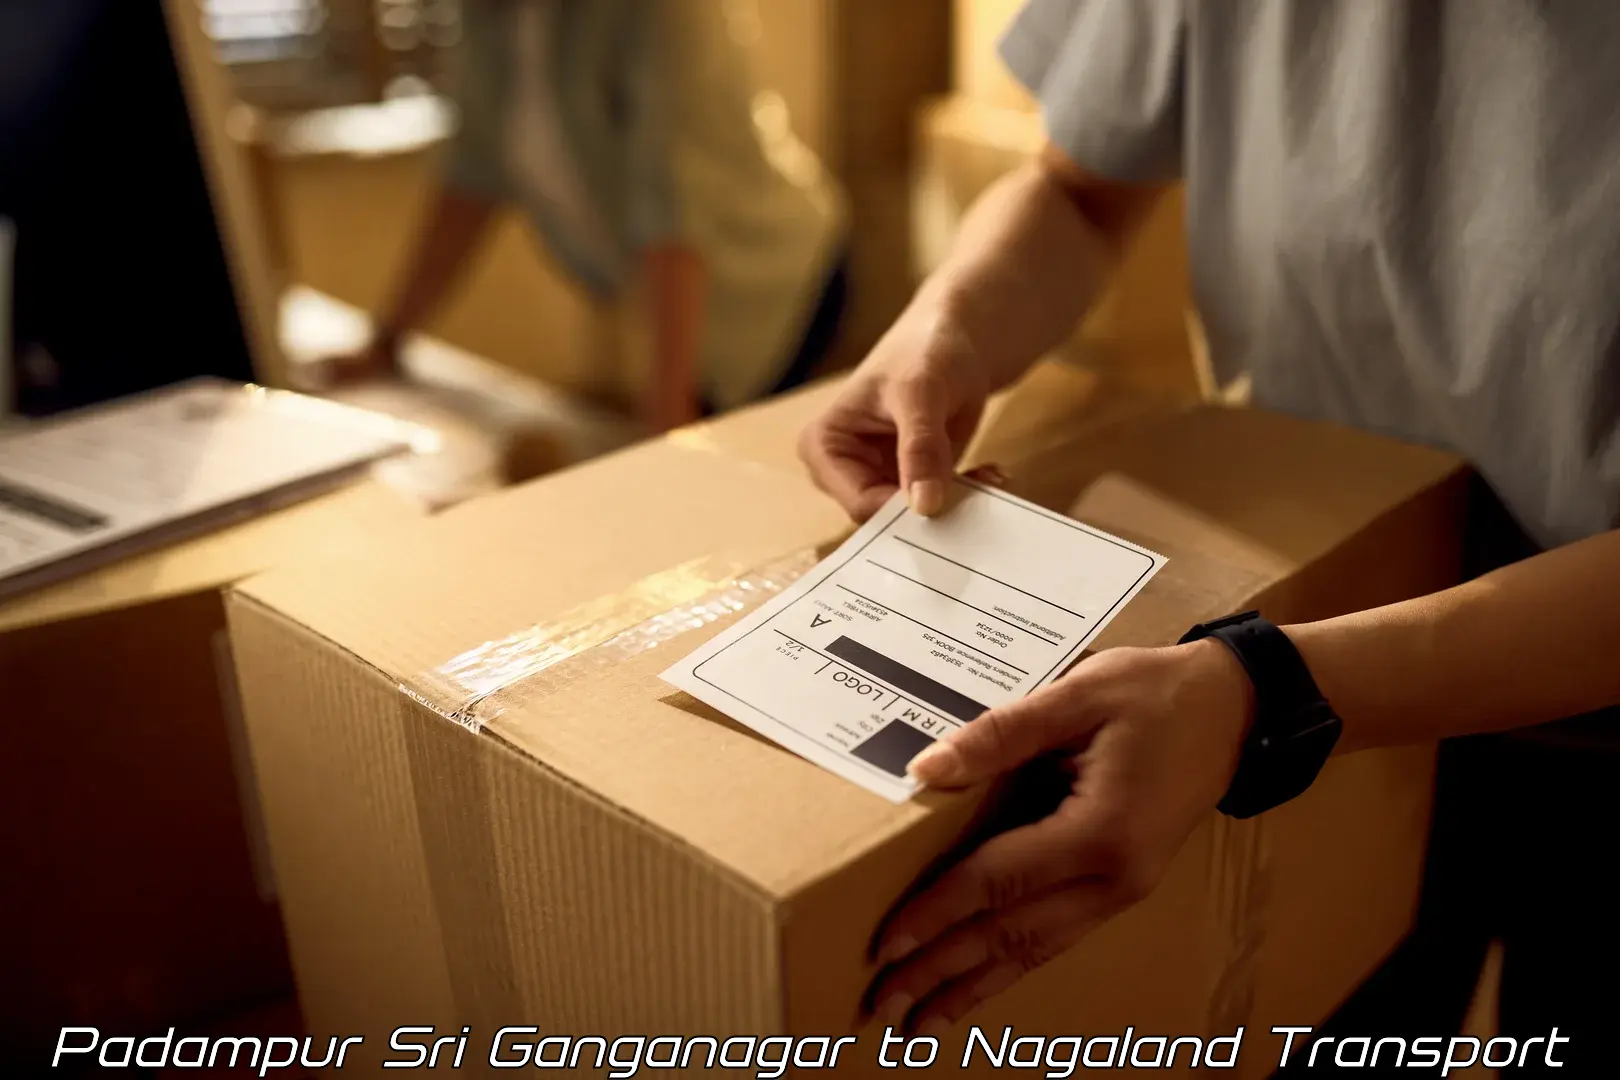 International cargo transportation services Padampur Sri Ganganagar to Nagaland